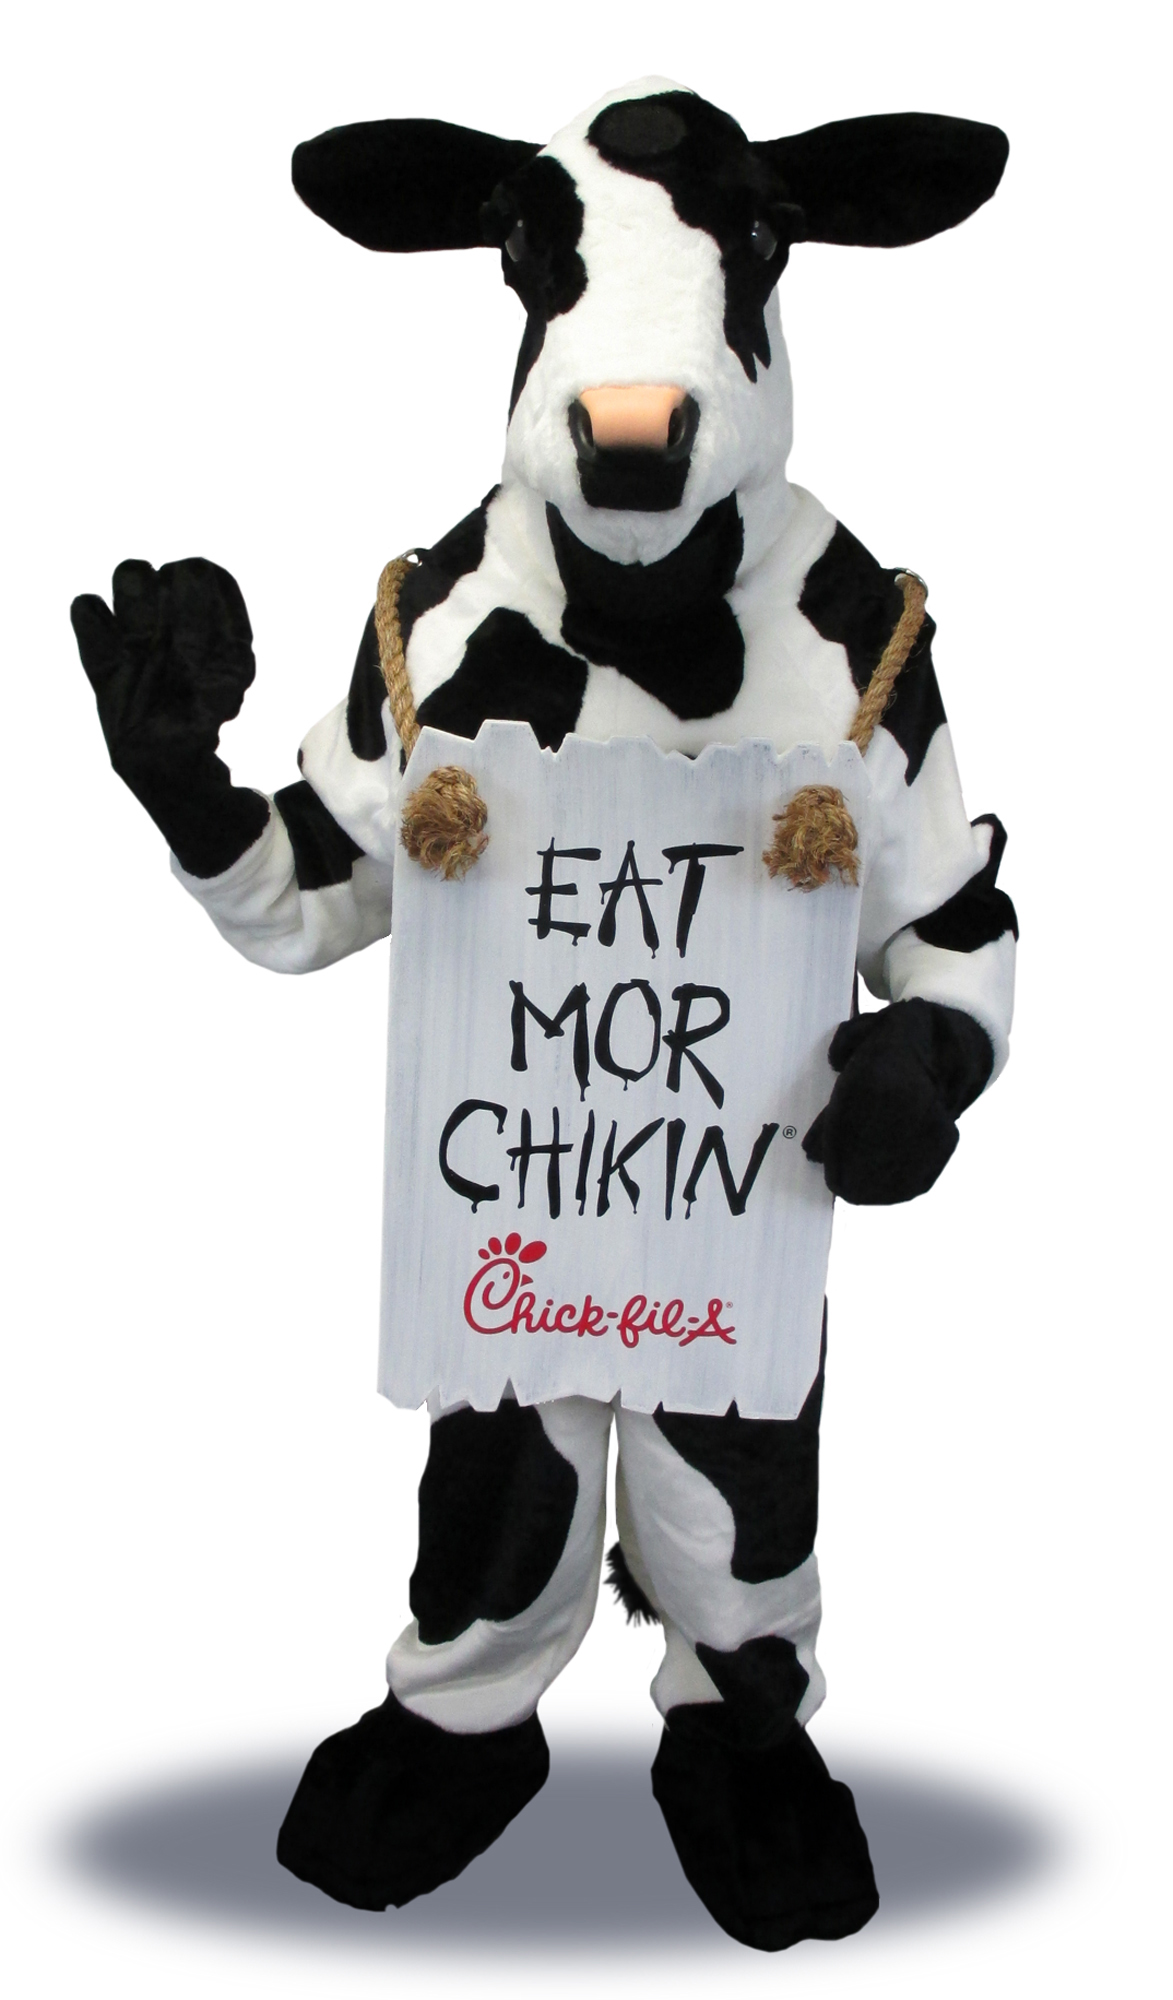 Chick Fil A Cow Mascot Costume